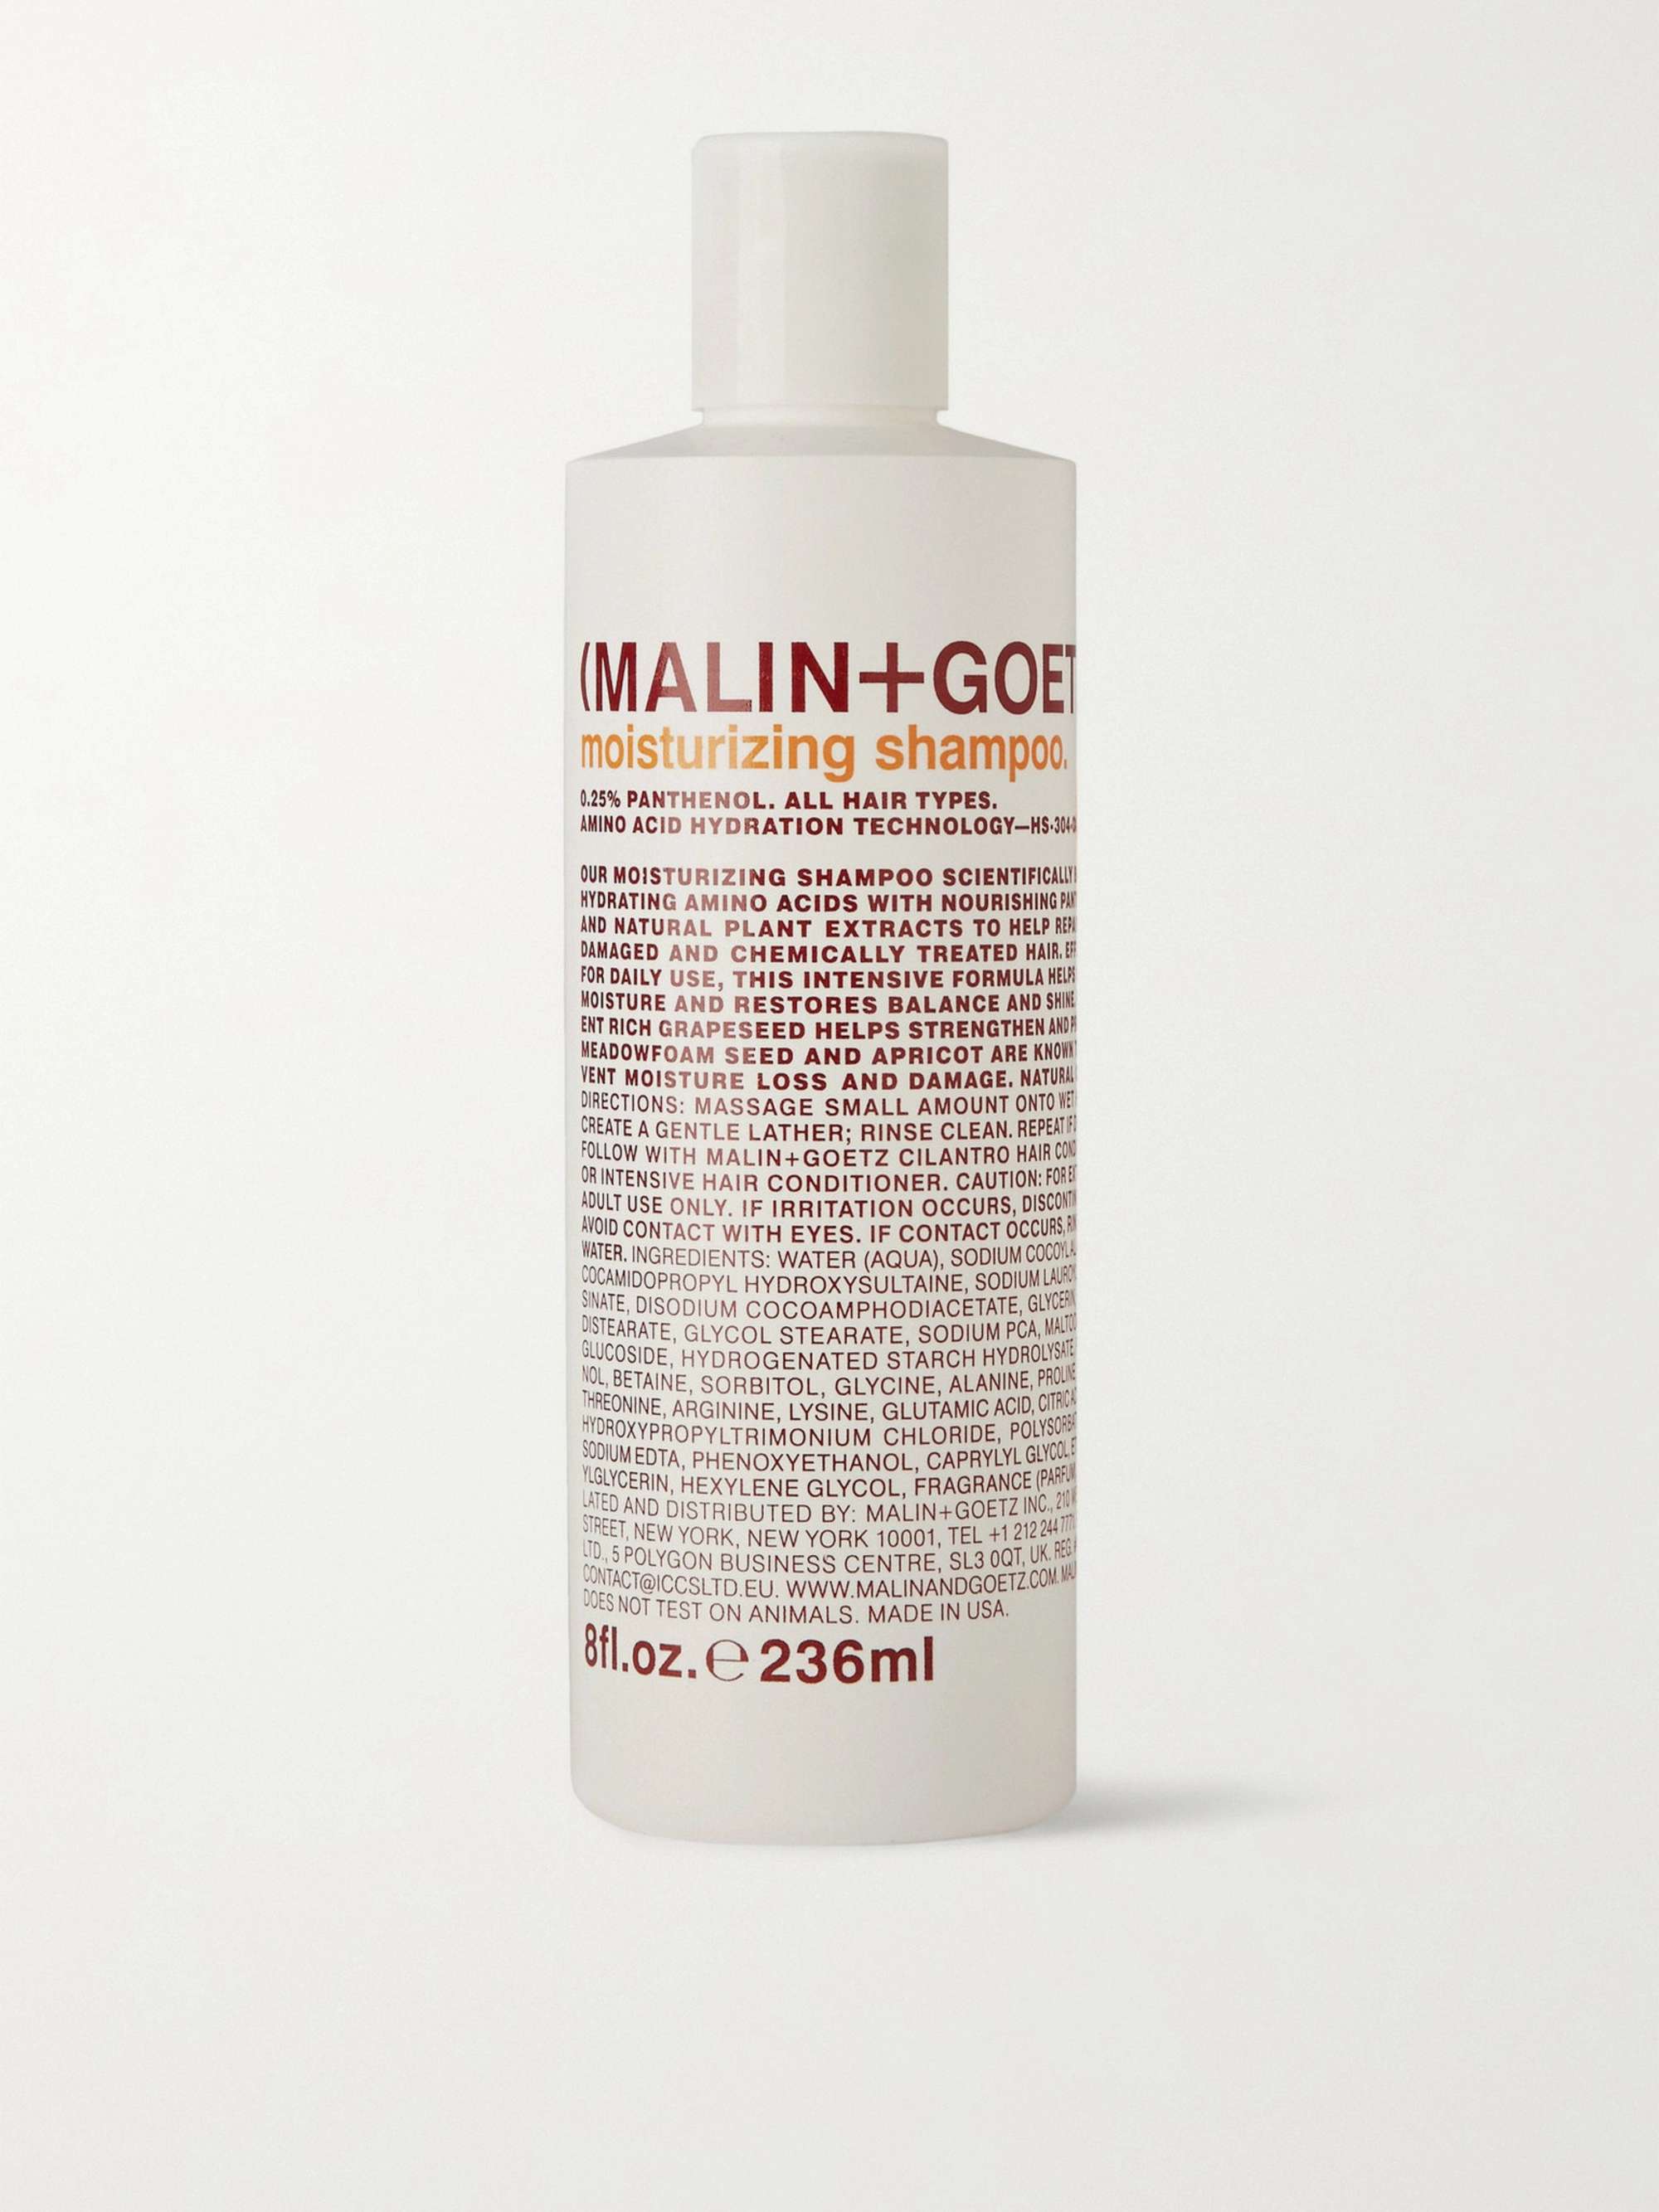 MALIN + GOETZ Moisturizing Shampoo, 236ml